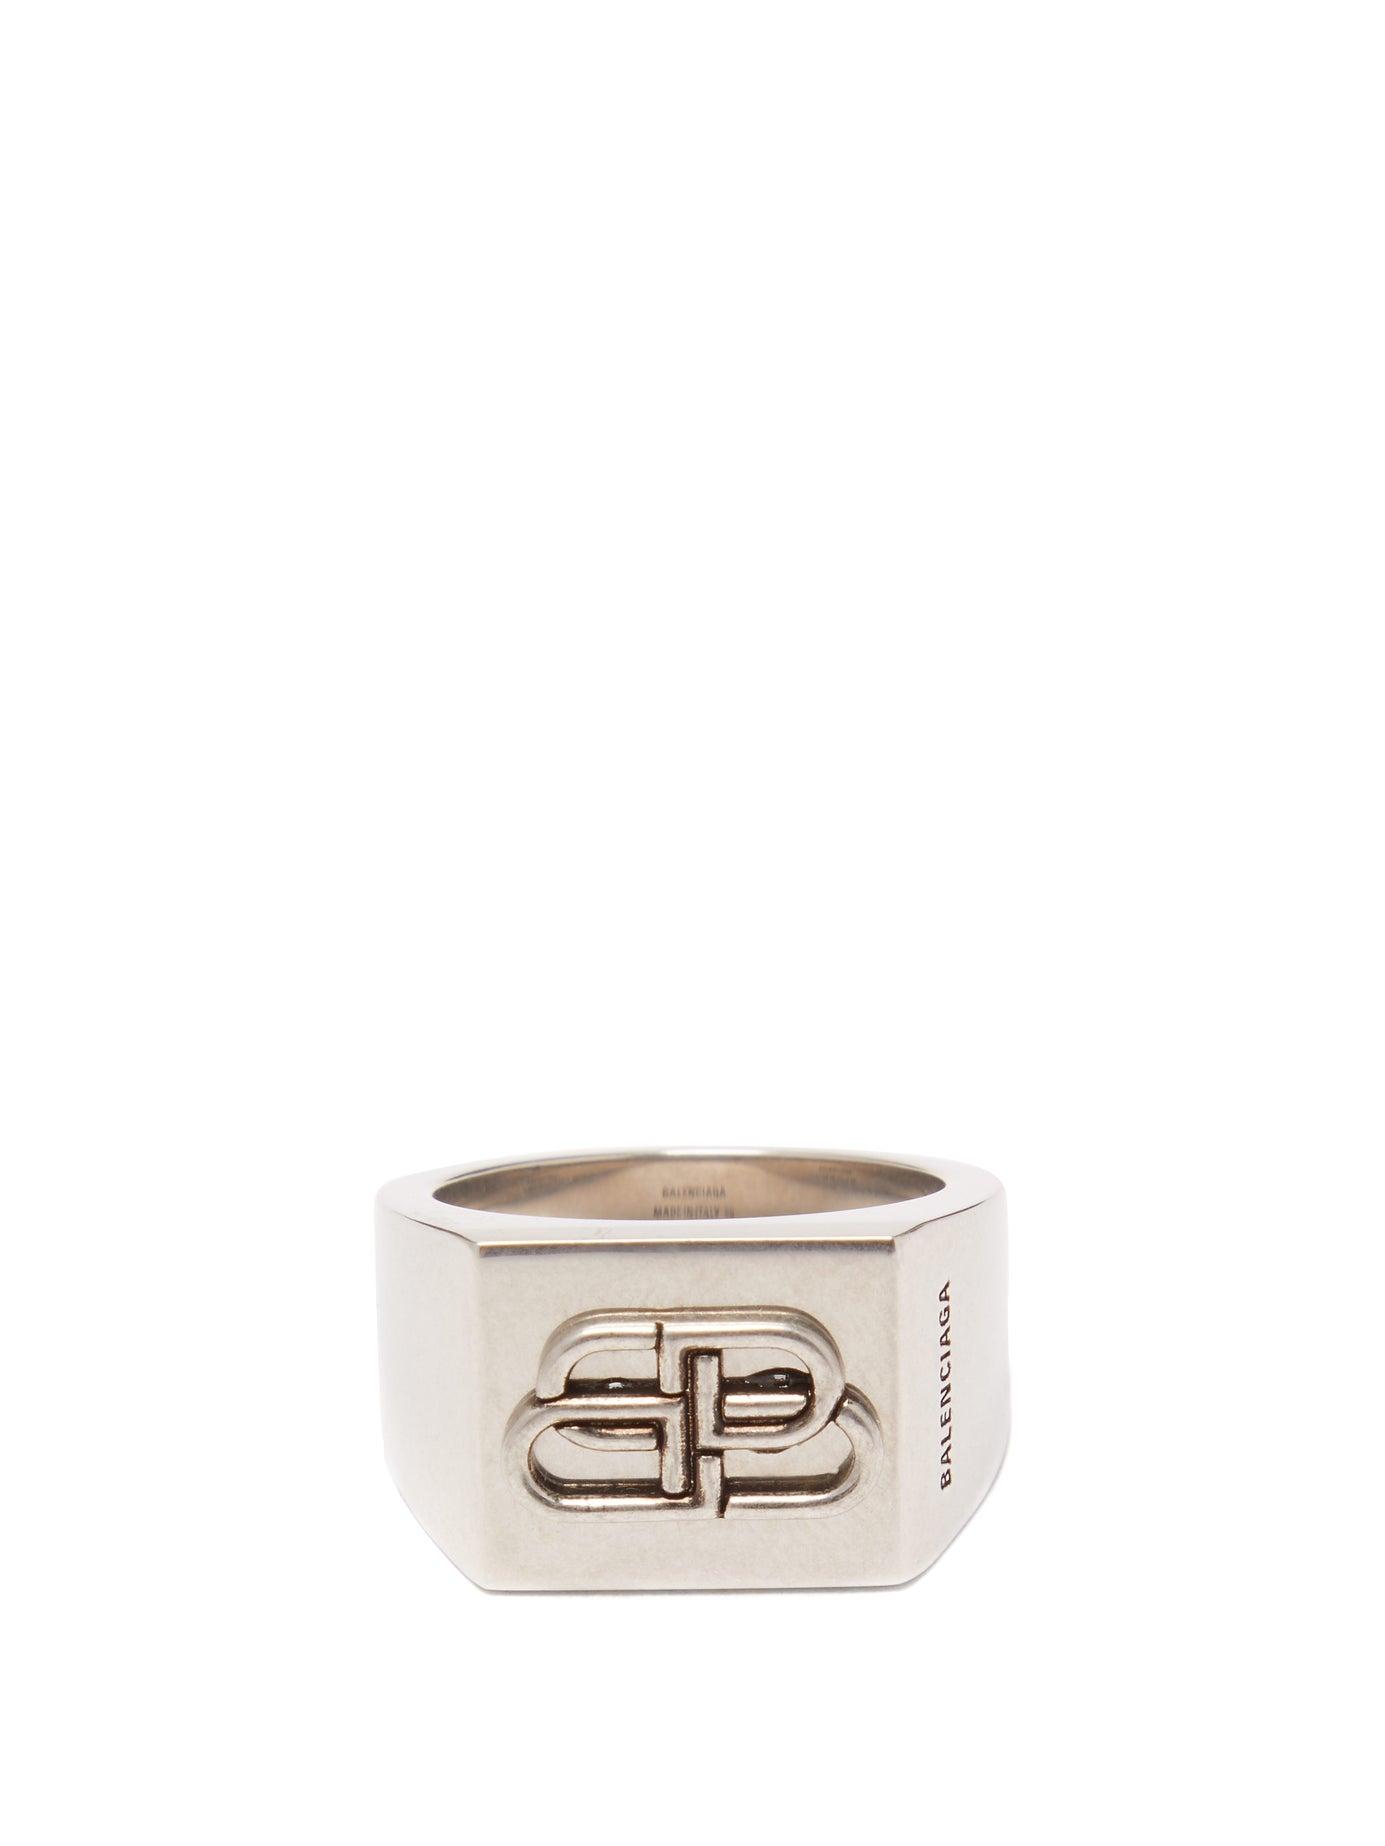 Balenciaga Bb-logo Ring in Silver (Metallic) for Men - Lyst